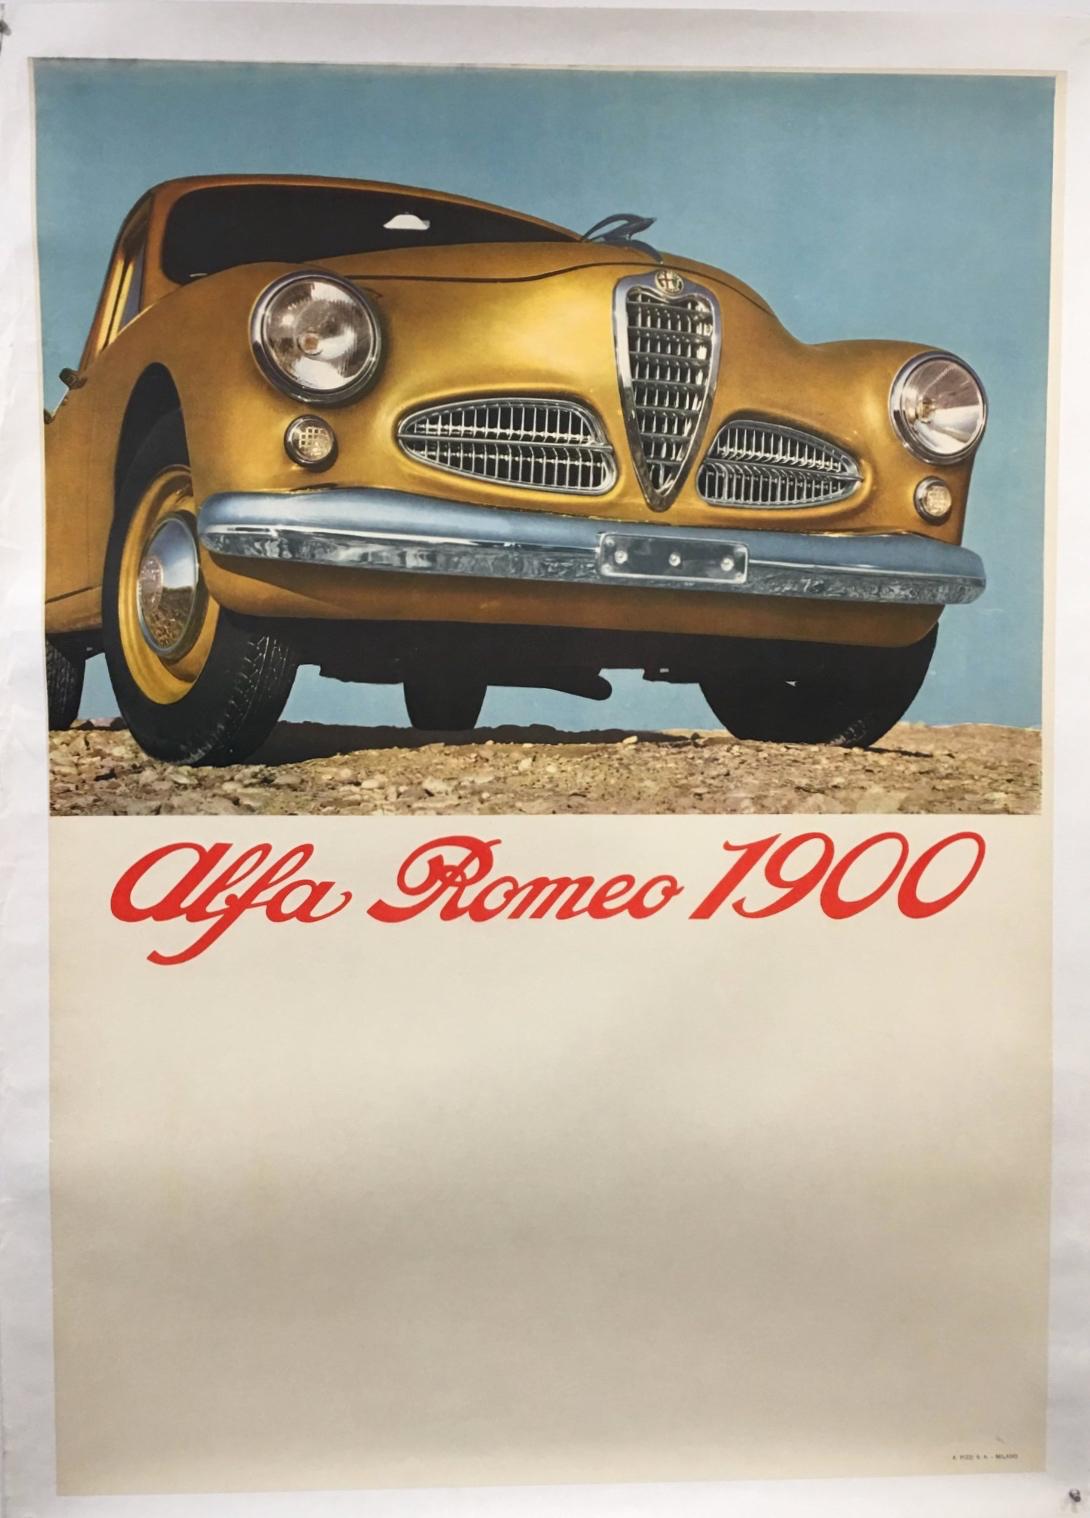 Unknown Still-Life Print – ALFA ROMEO 1900 - ITALIAN - CARS - FACTORY DEALER POSTER - GOLD - 1951